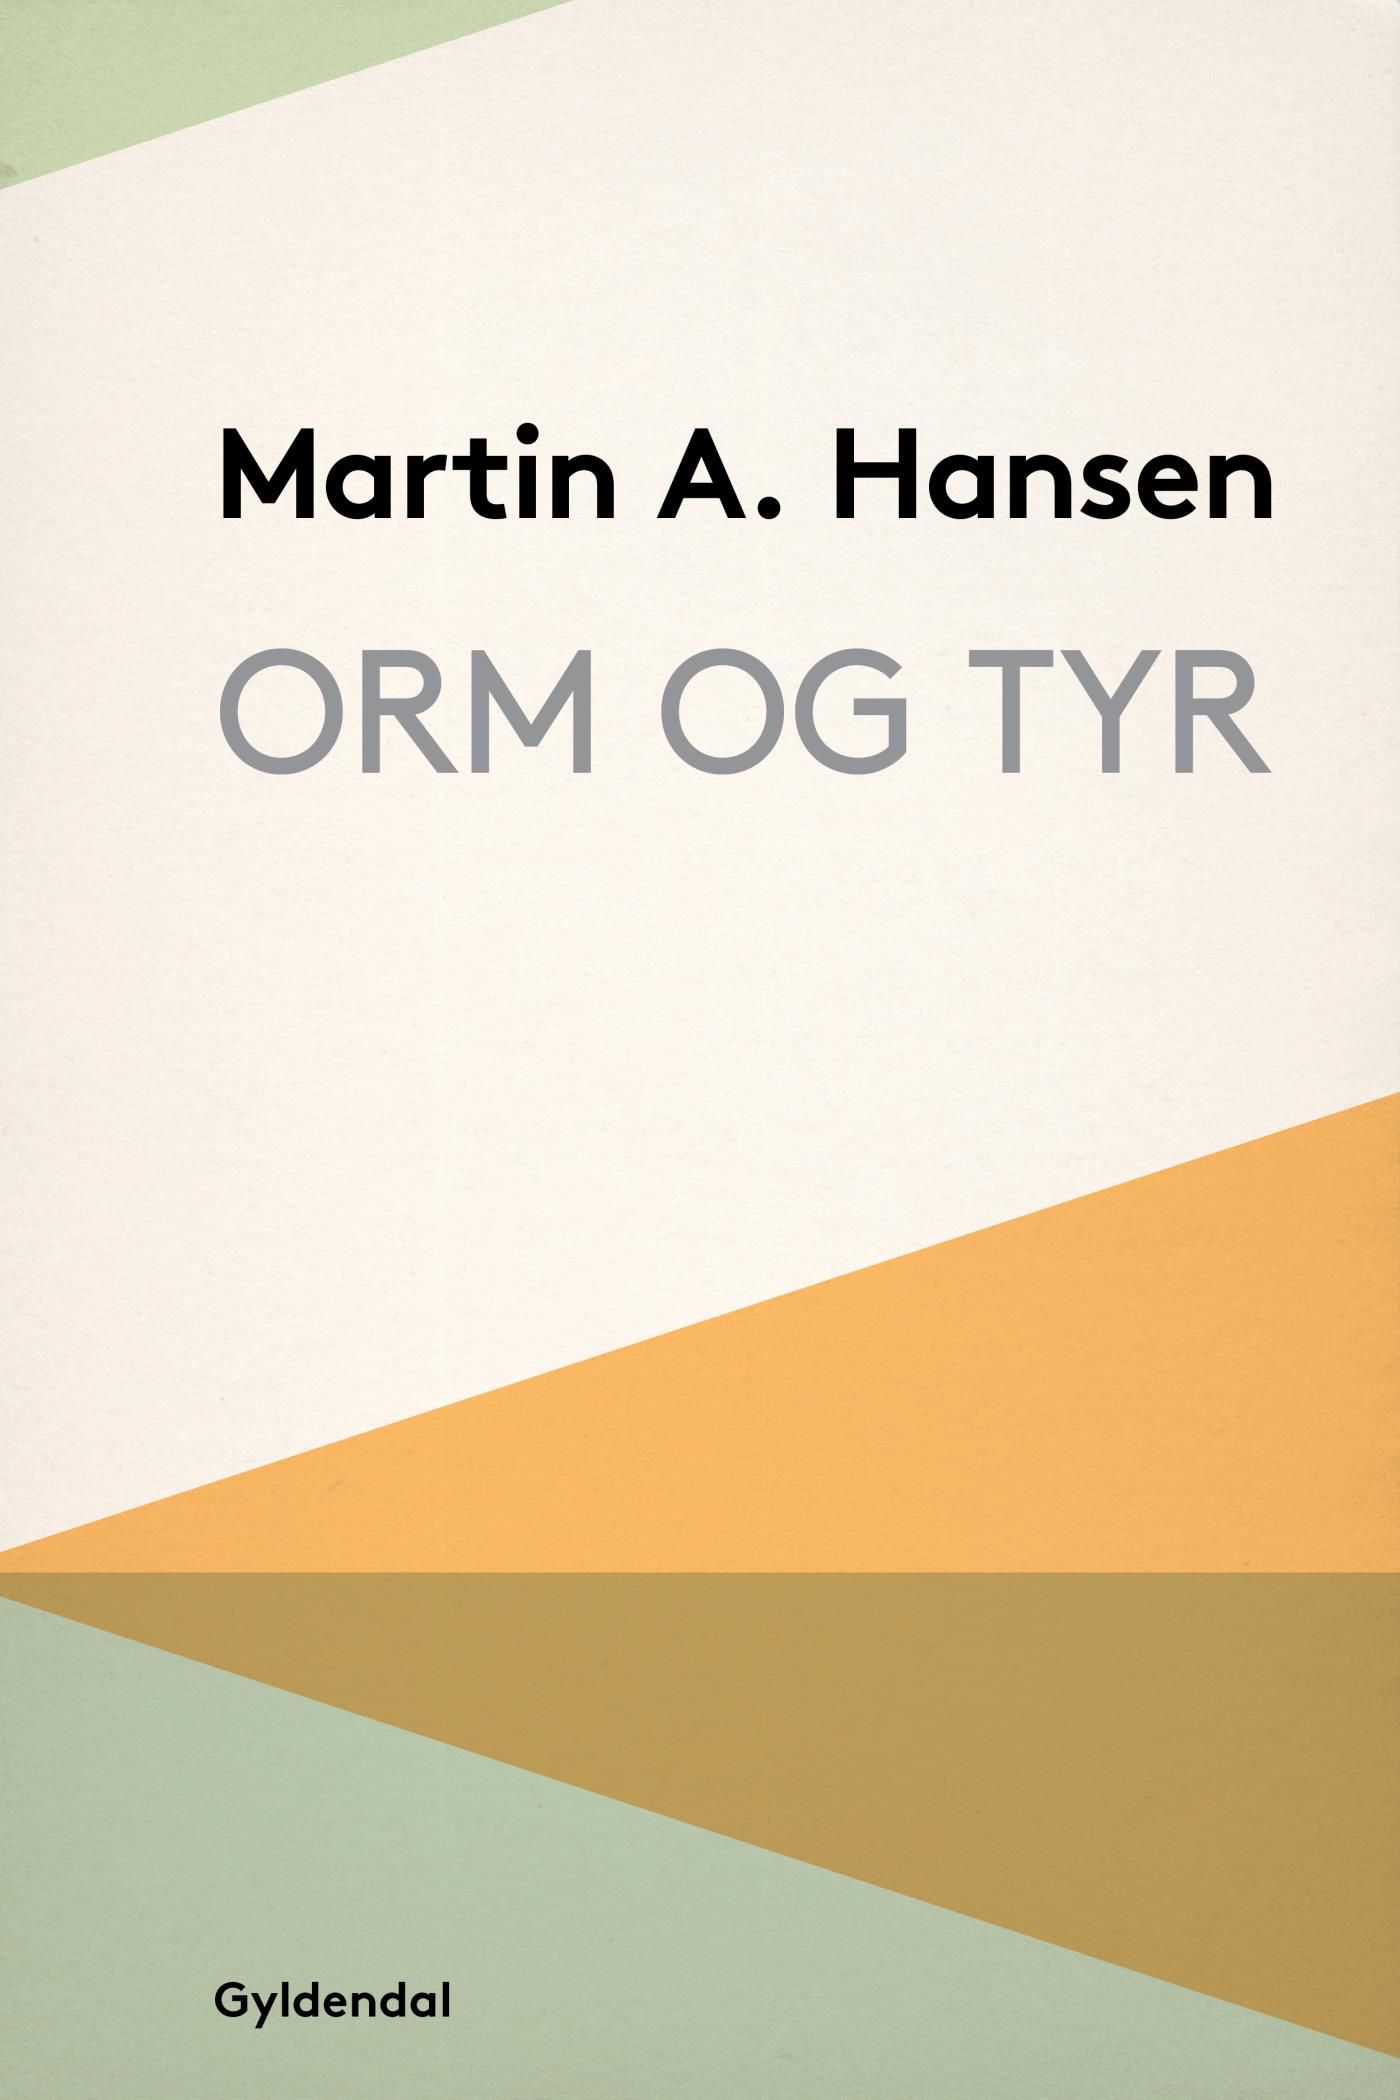 Orm og Tyr, eBook by Martin A. Hansen